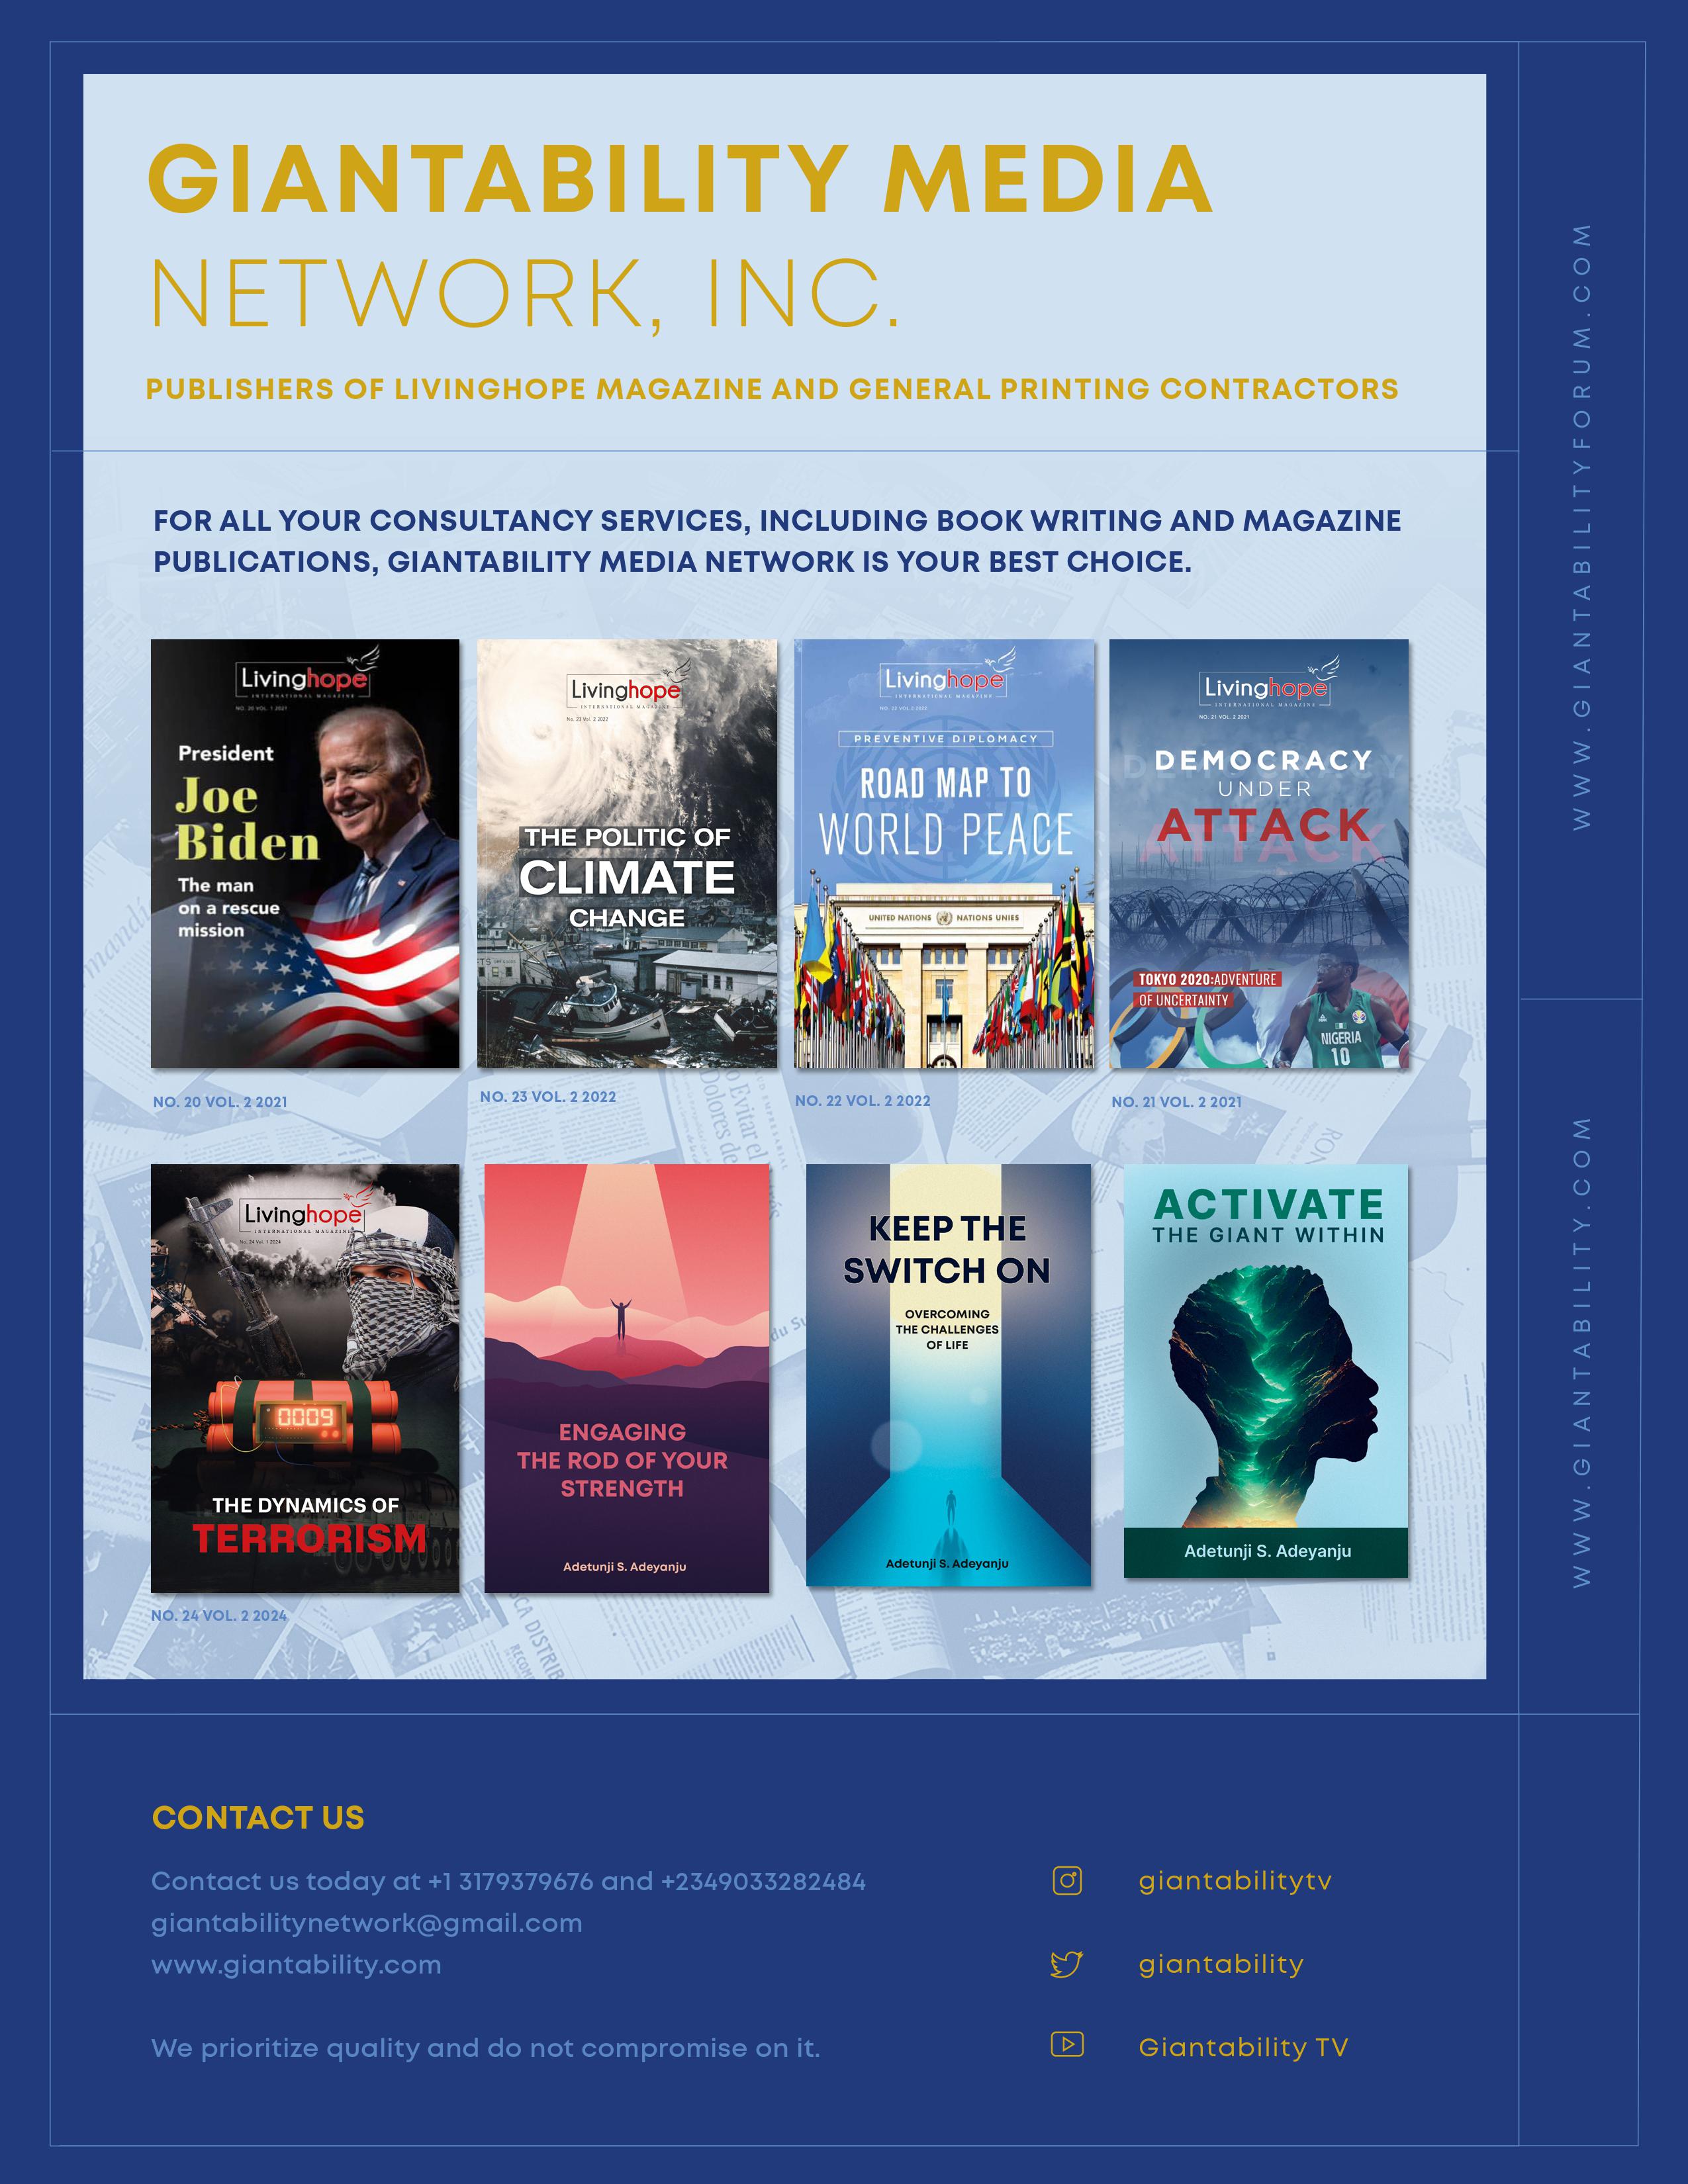 Giantability Media Network, Inc